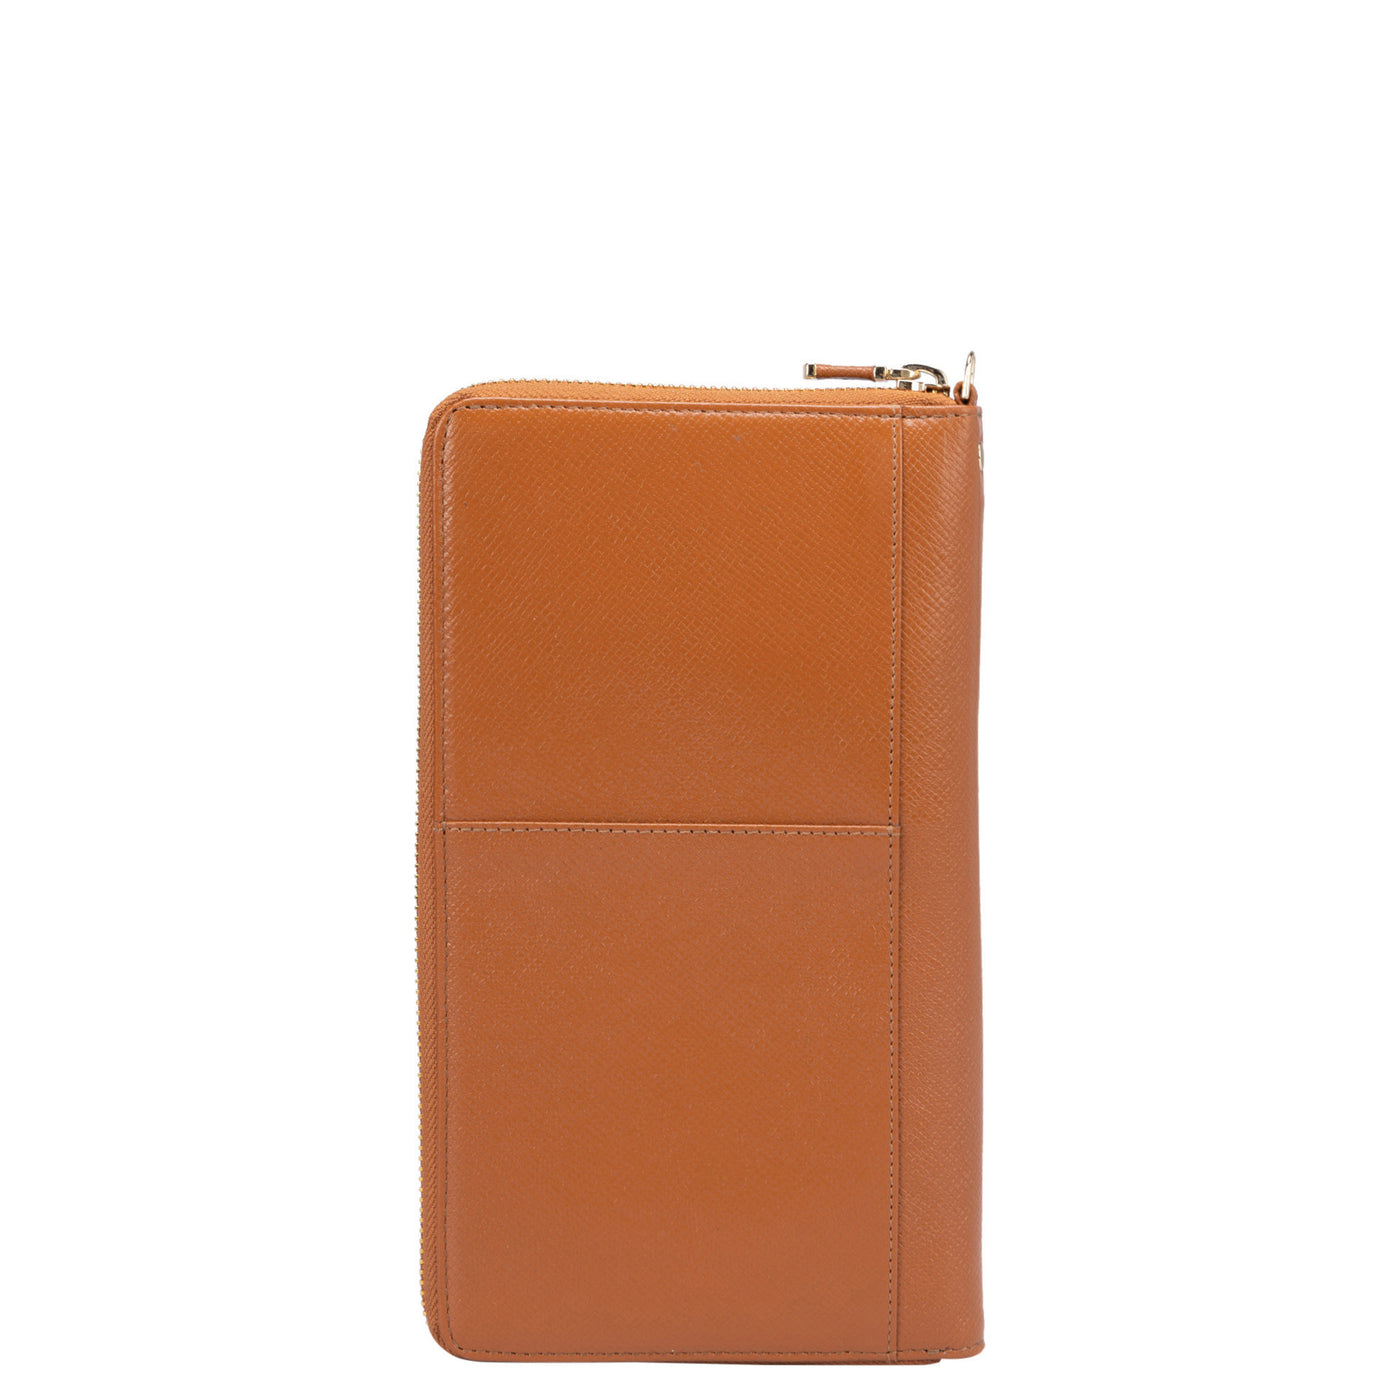 Franzy Leather Passport Case - Cognac